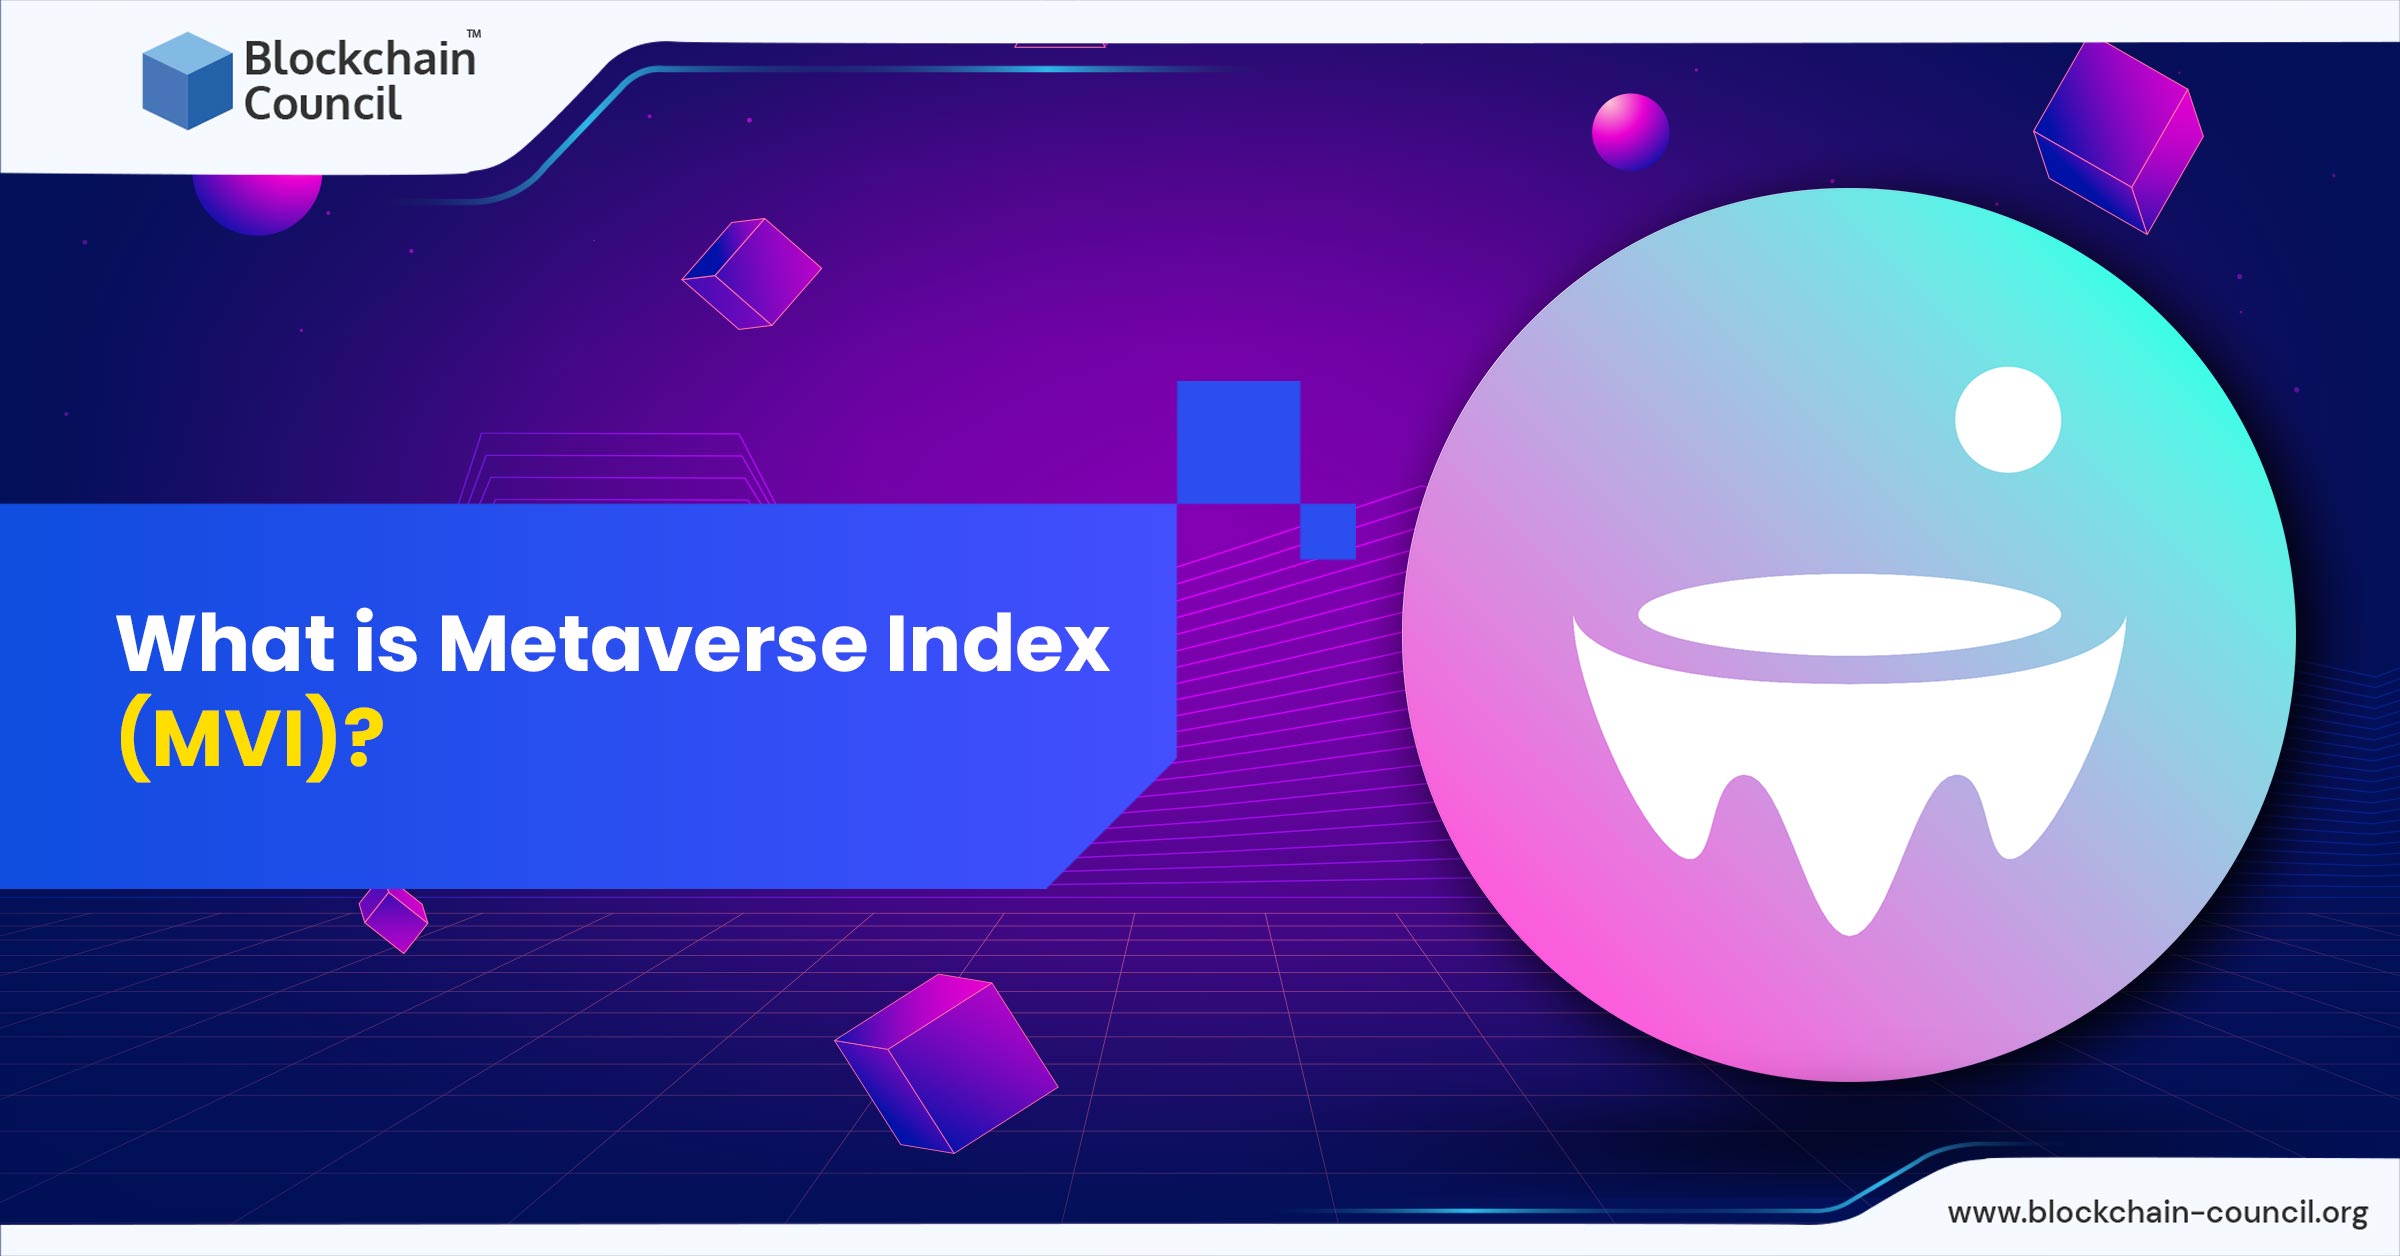 What is Metaverse Index (MVI)?